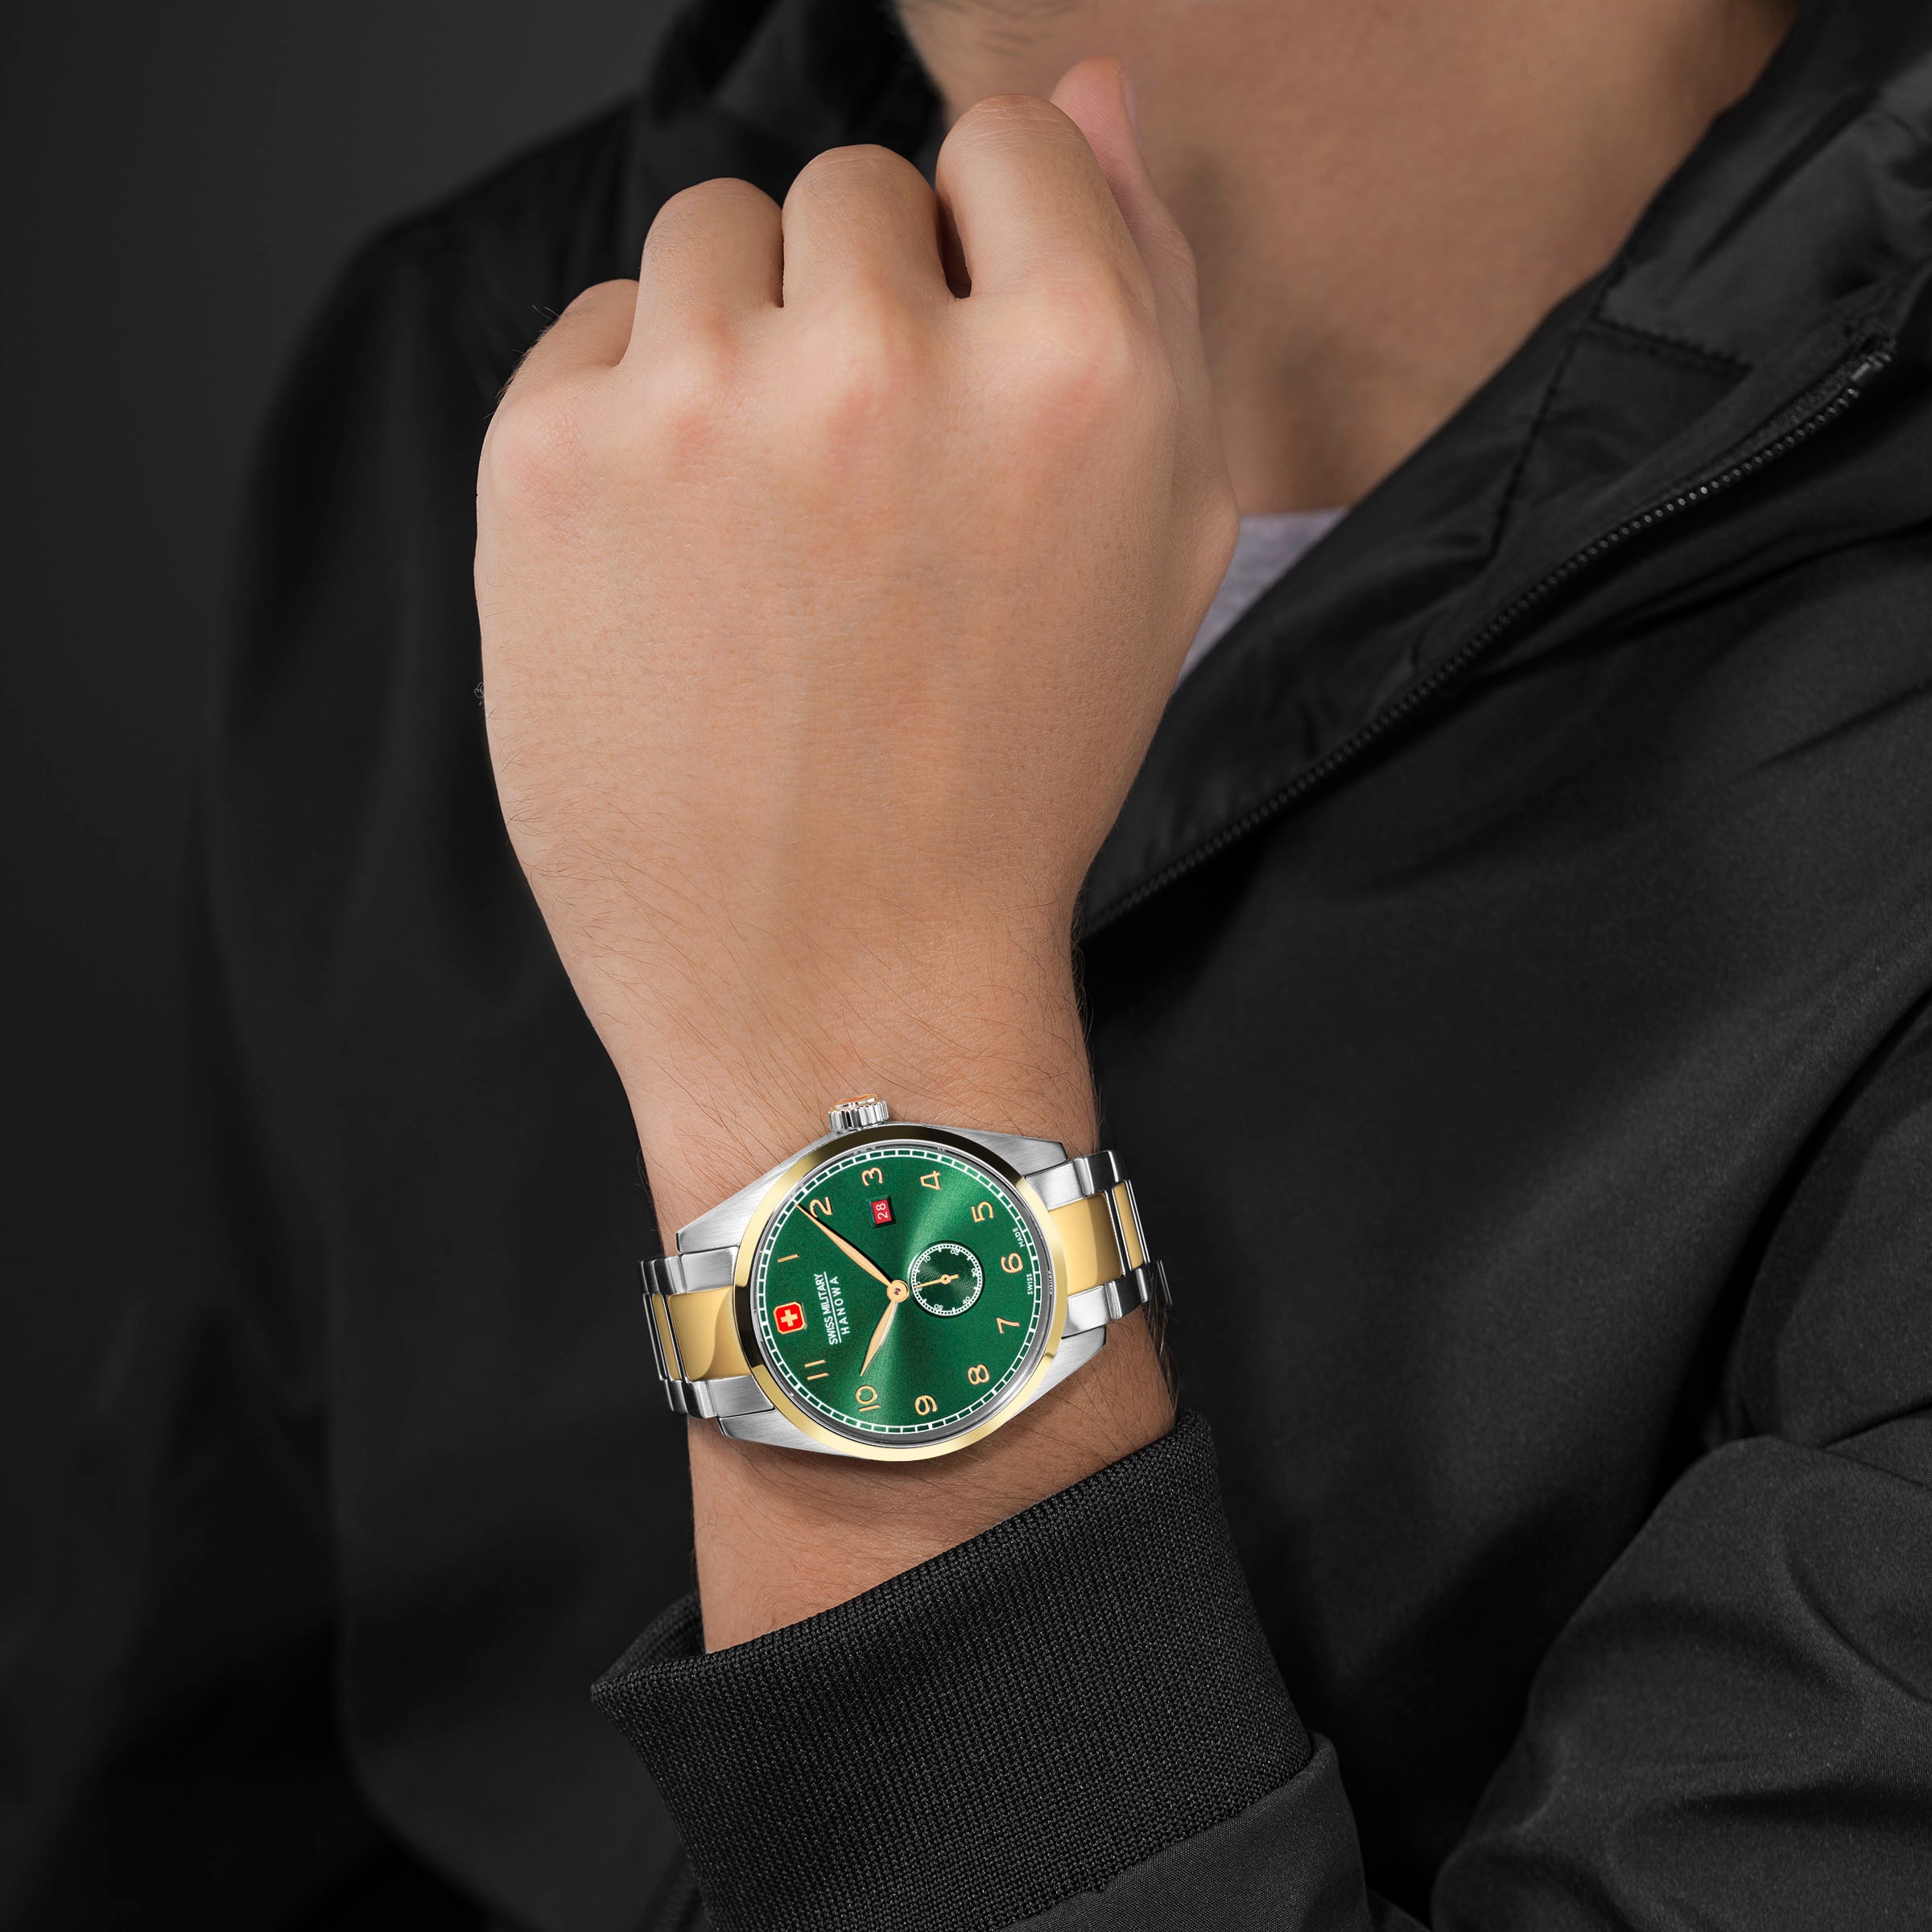 Swiss Military Hanowa Schweizer Uhr »LYNX, SMWGH0000760«, Quarzuhr, Armbanduhr, Herrenuhr, Swiss Made, bicolor, Datum